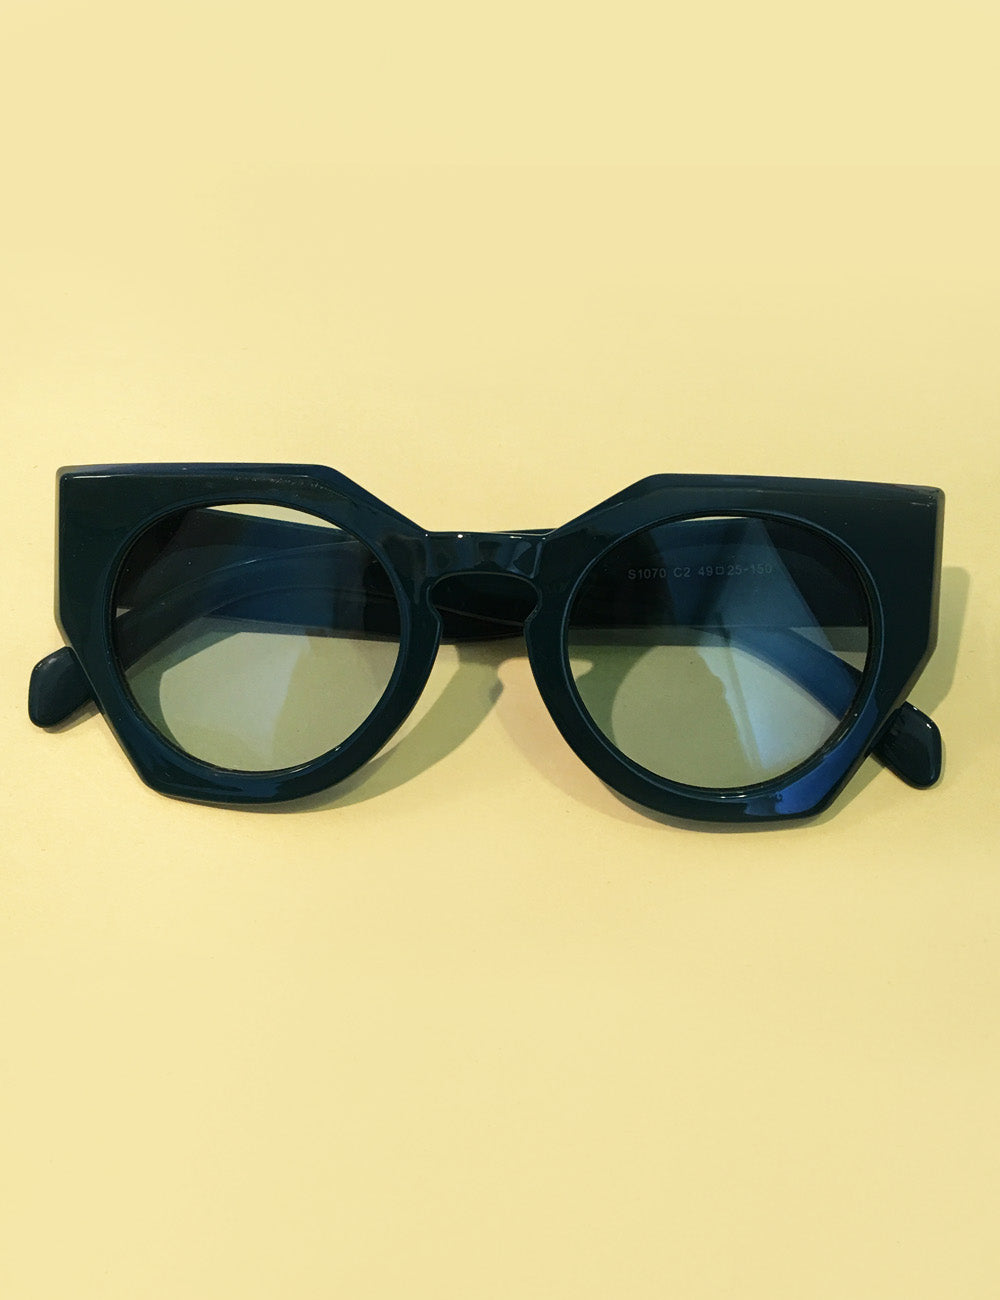 Teal Green 1960s Inspired Geometric Sunglasses